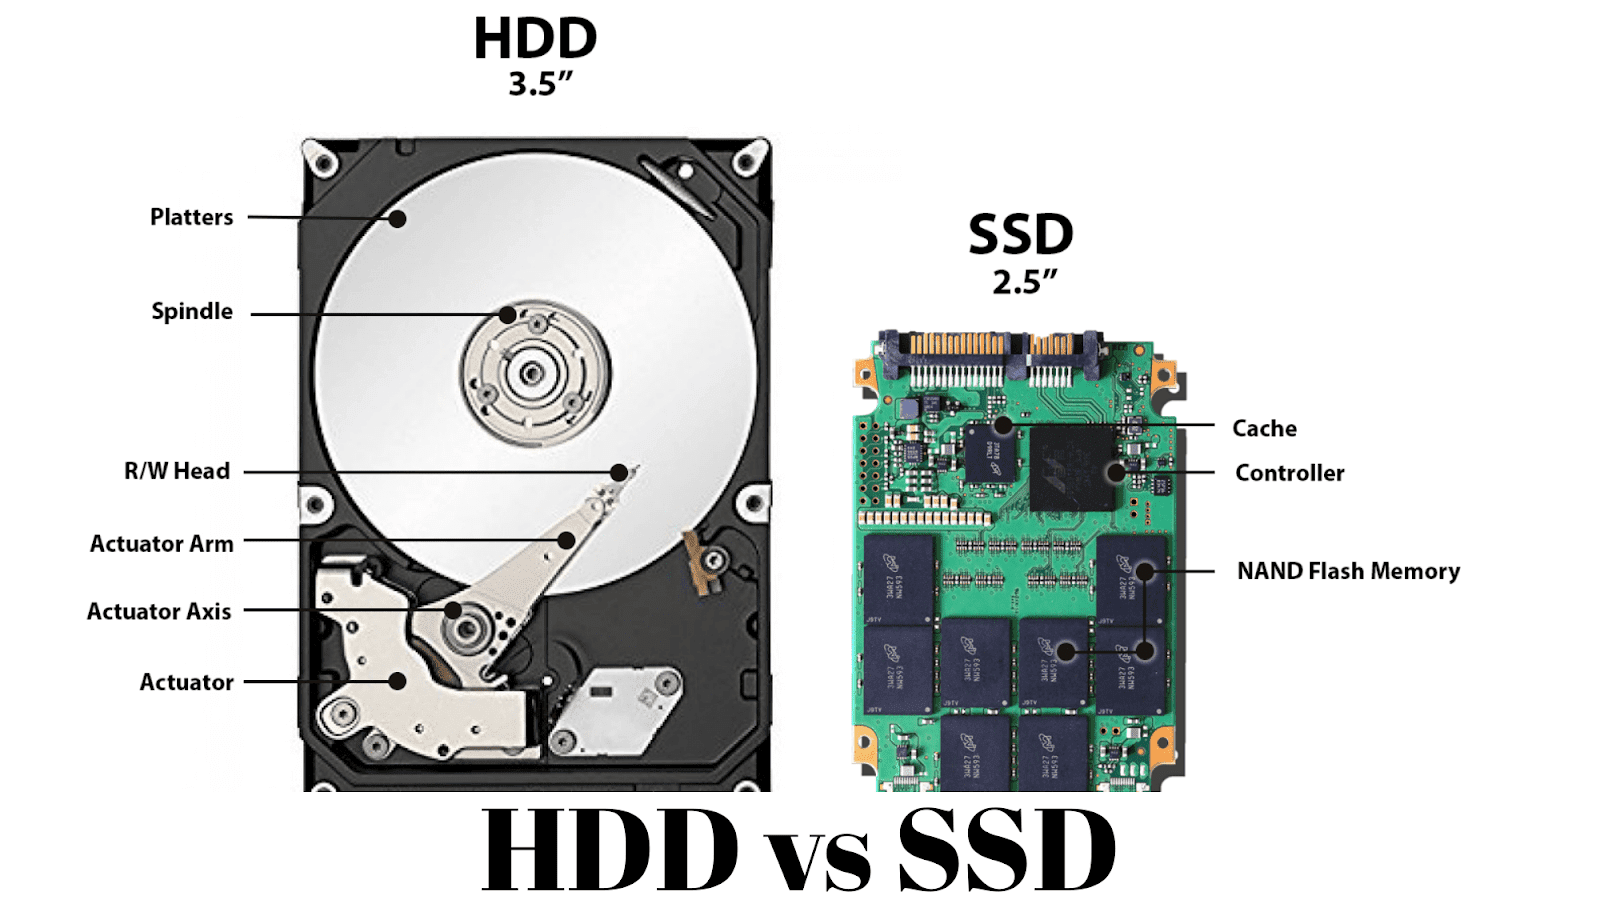 Ssd vs hdd | скорость работы ssd и hdd | особенности устройств | преимущества ssd